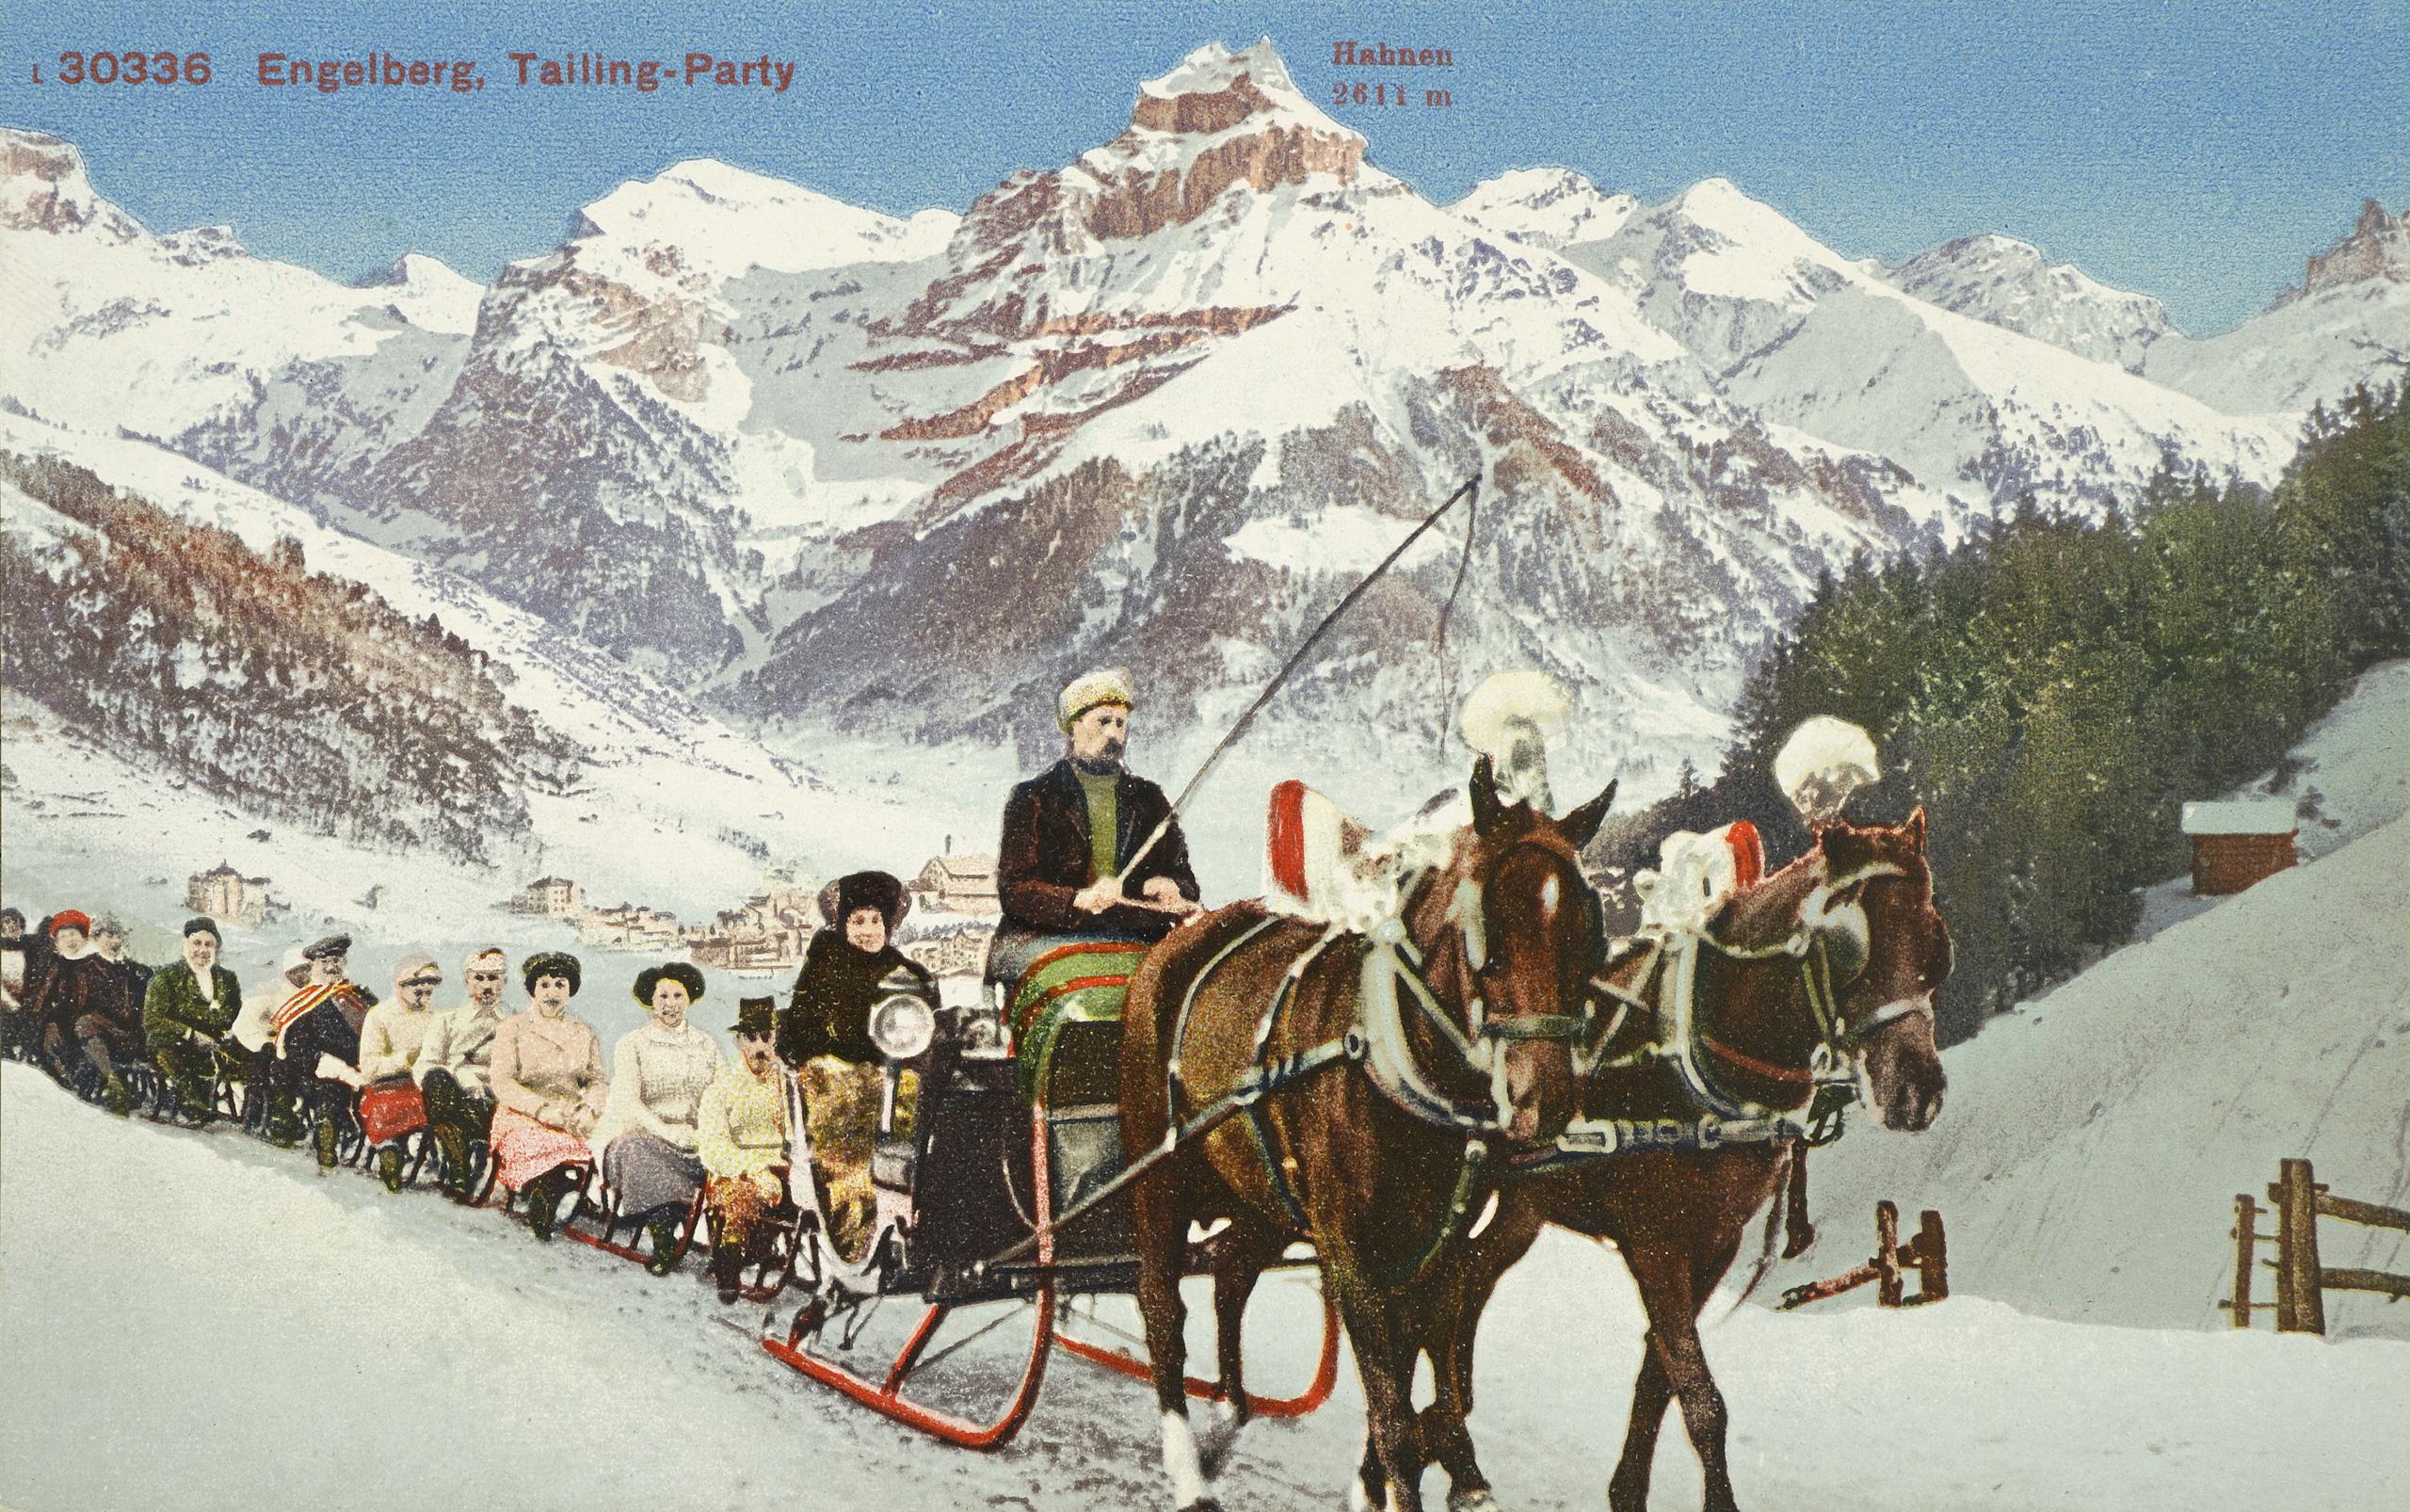 horse sleigh and mountains